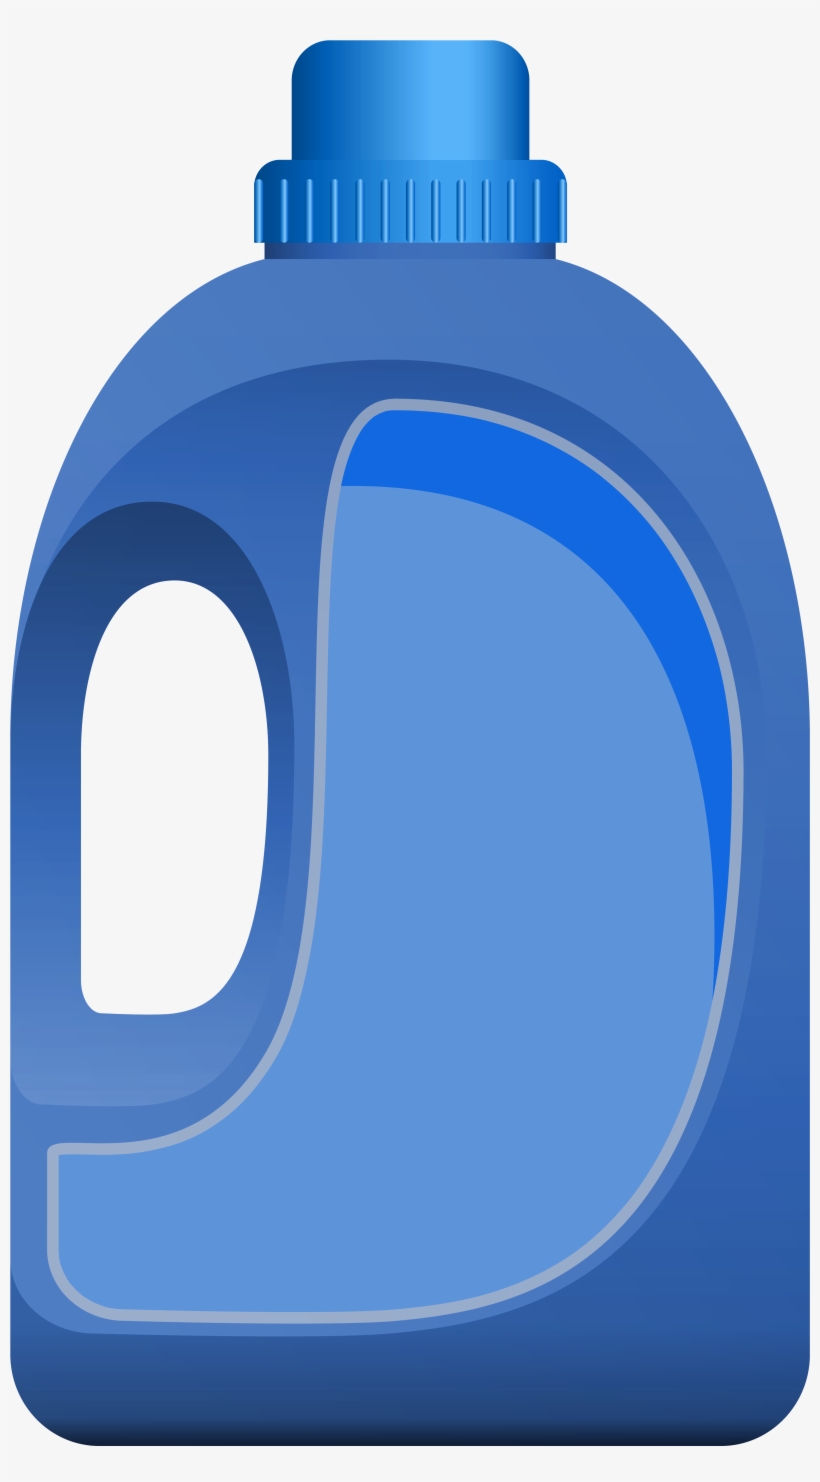 Blue Plastic Jerrycan Oil Png Clipart - Portable Network Graphics, transparent png #4217471